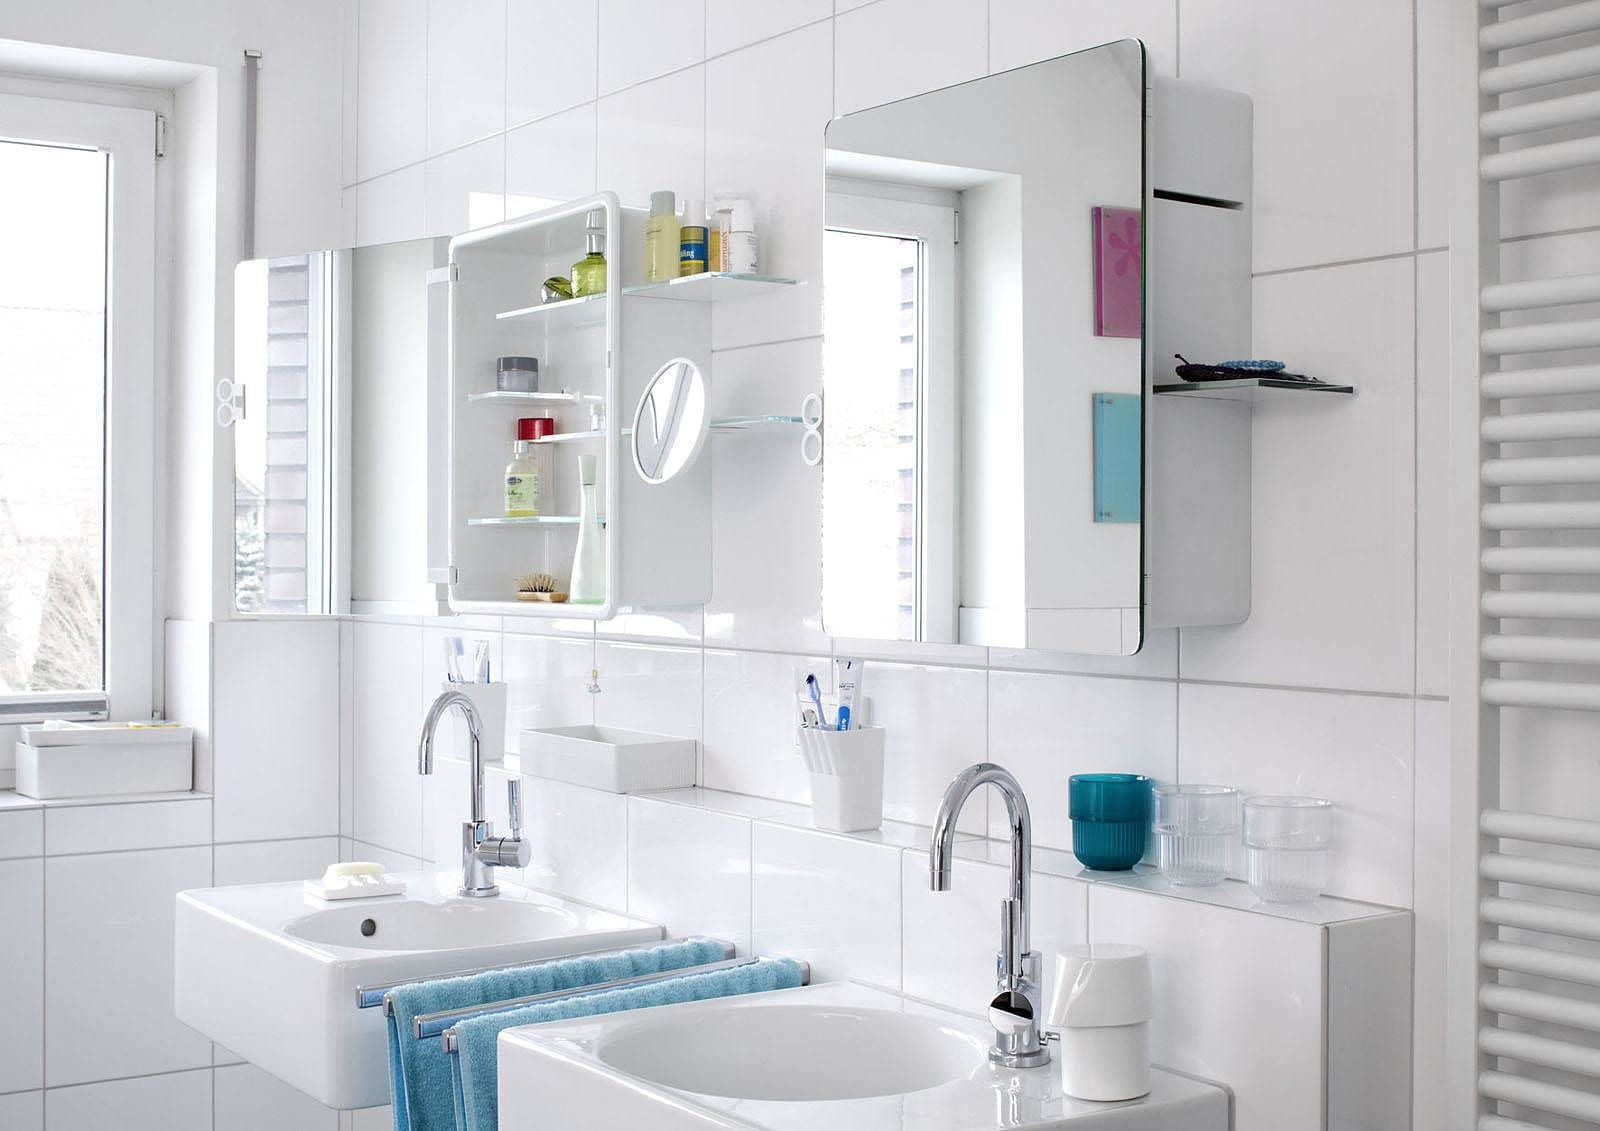 Bathroom Mirror Storage Cabinet
 Kali Bathroom Mirror Cabinet by Authentics Design Is This